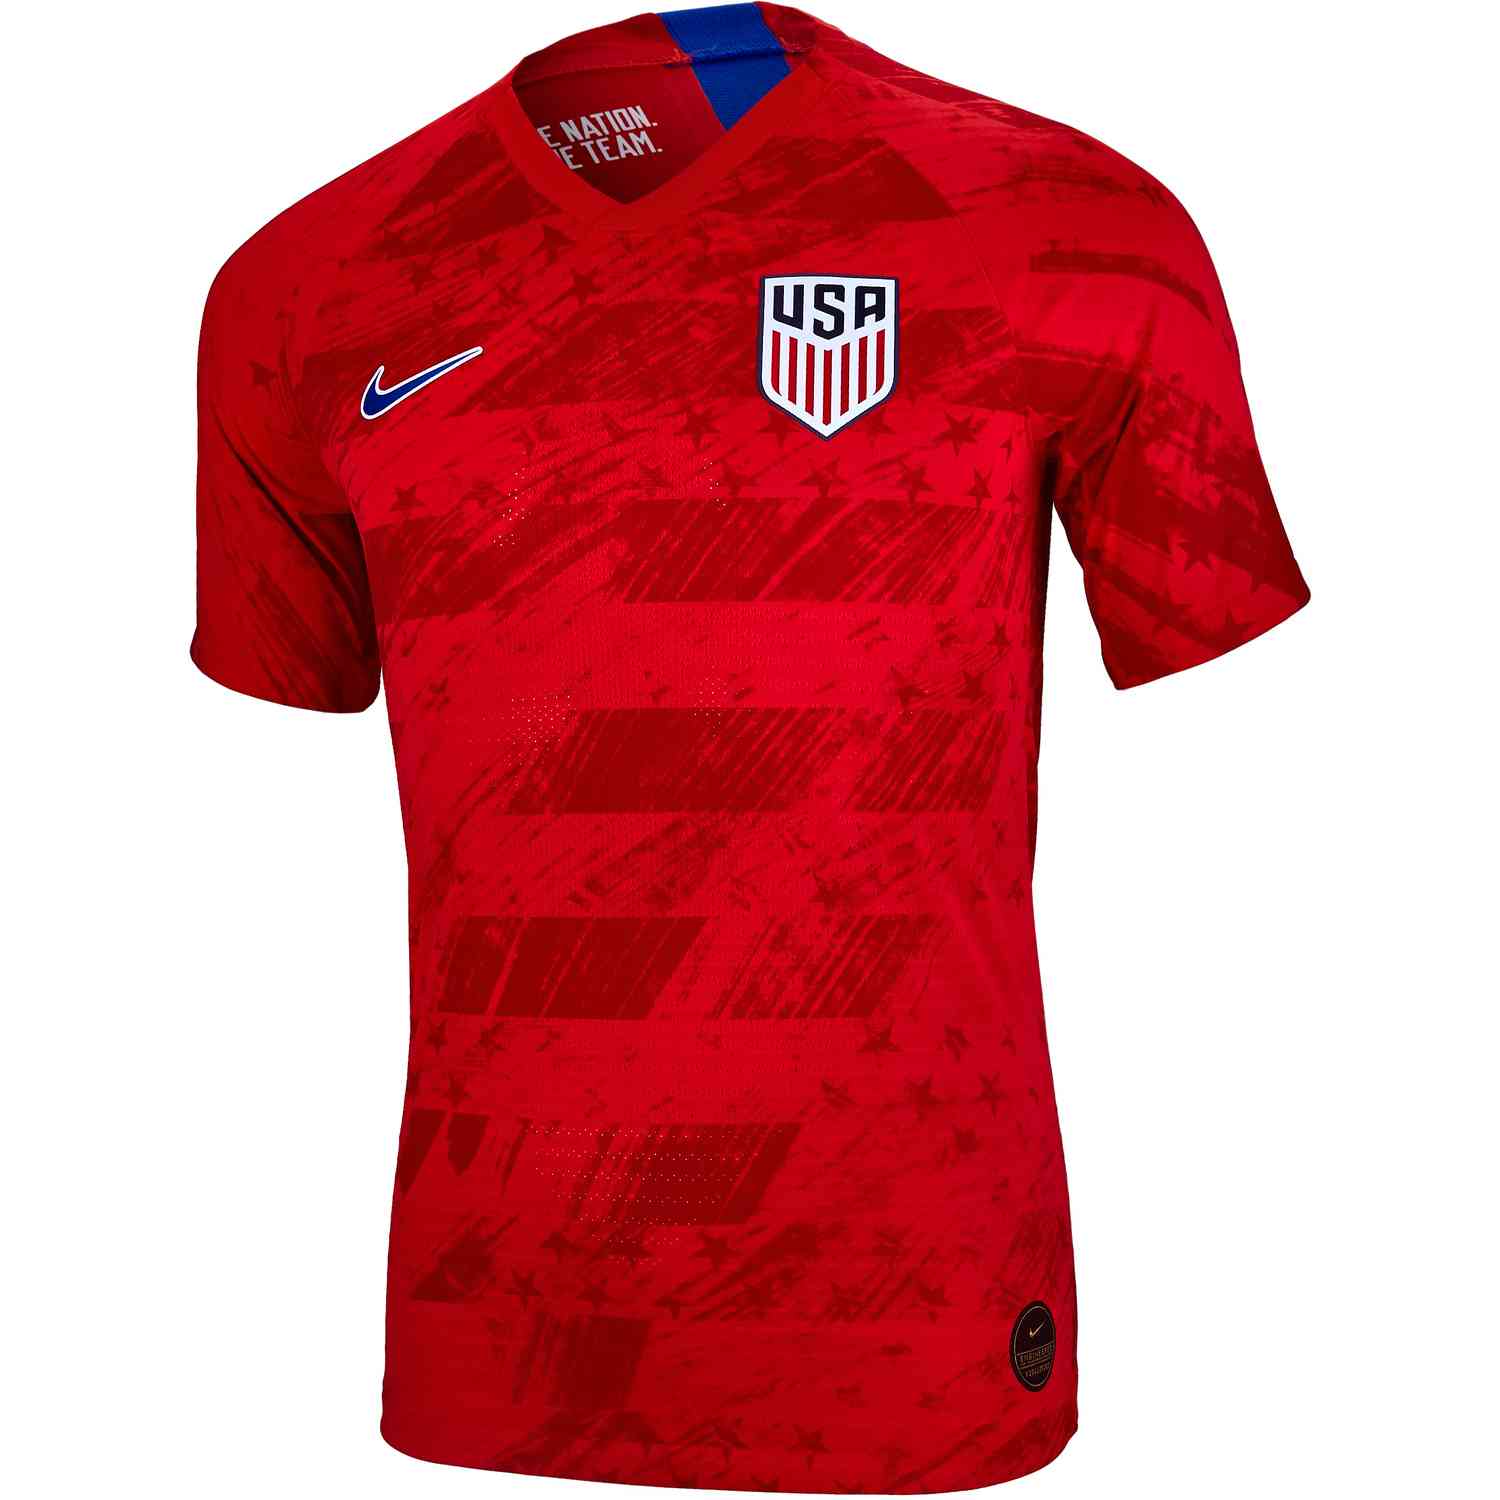 2019 Nike USMNT Away Match Jersey - SoccerPro